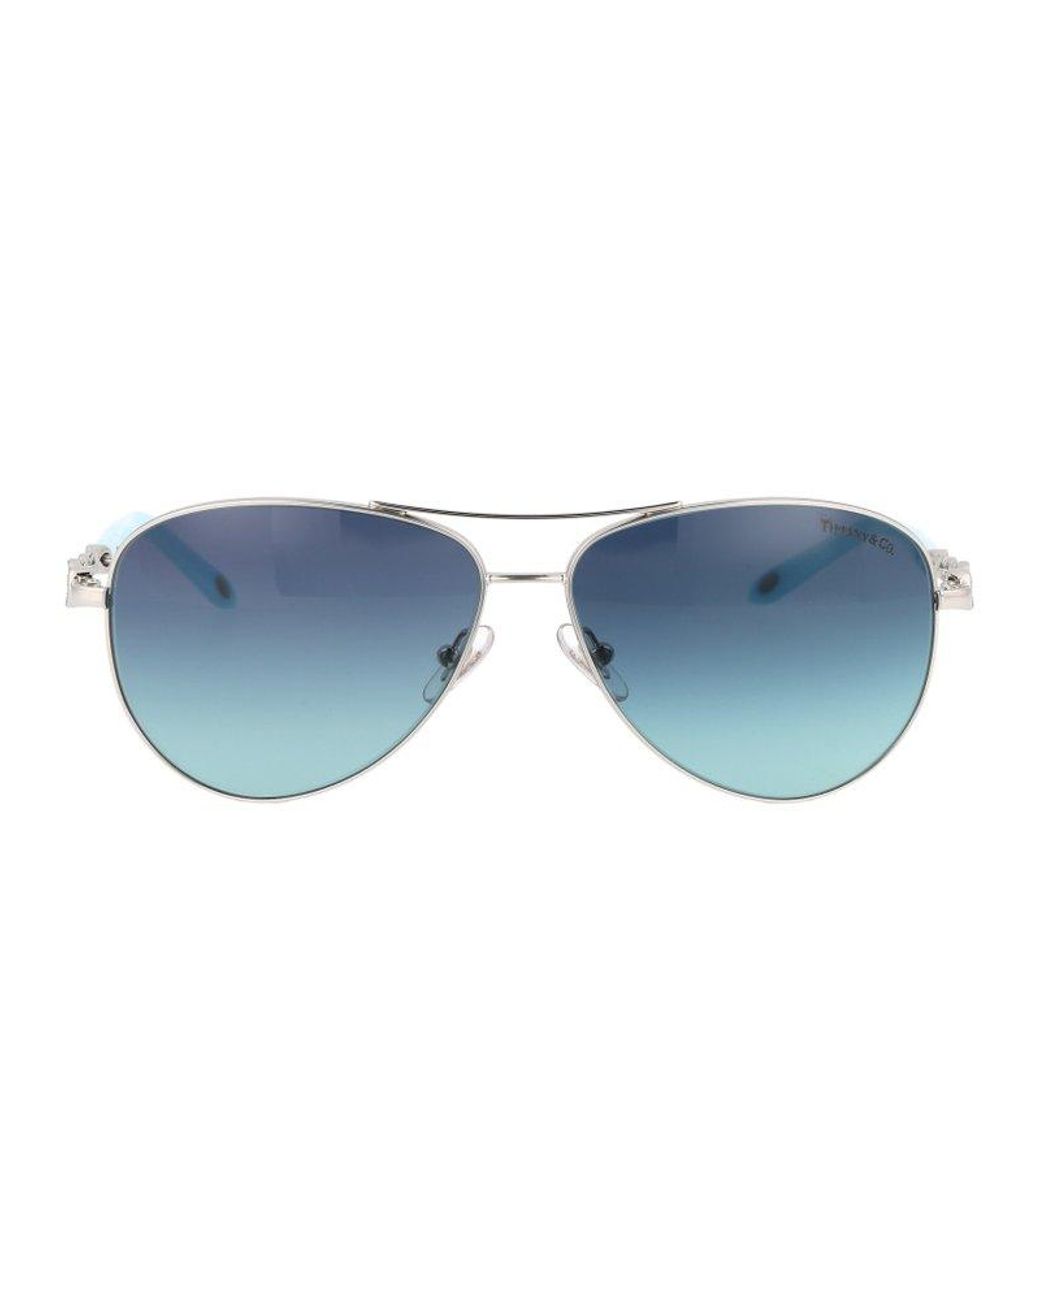 Brand New Tiffany & Co Aviator /Pilot Sunglasses... - Depop